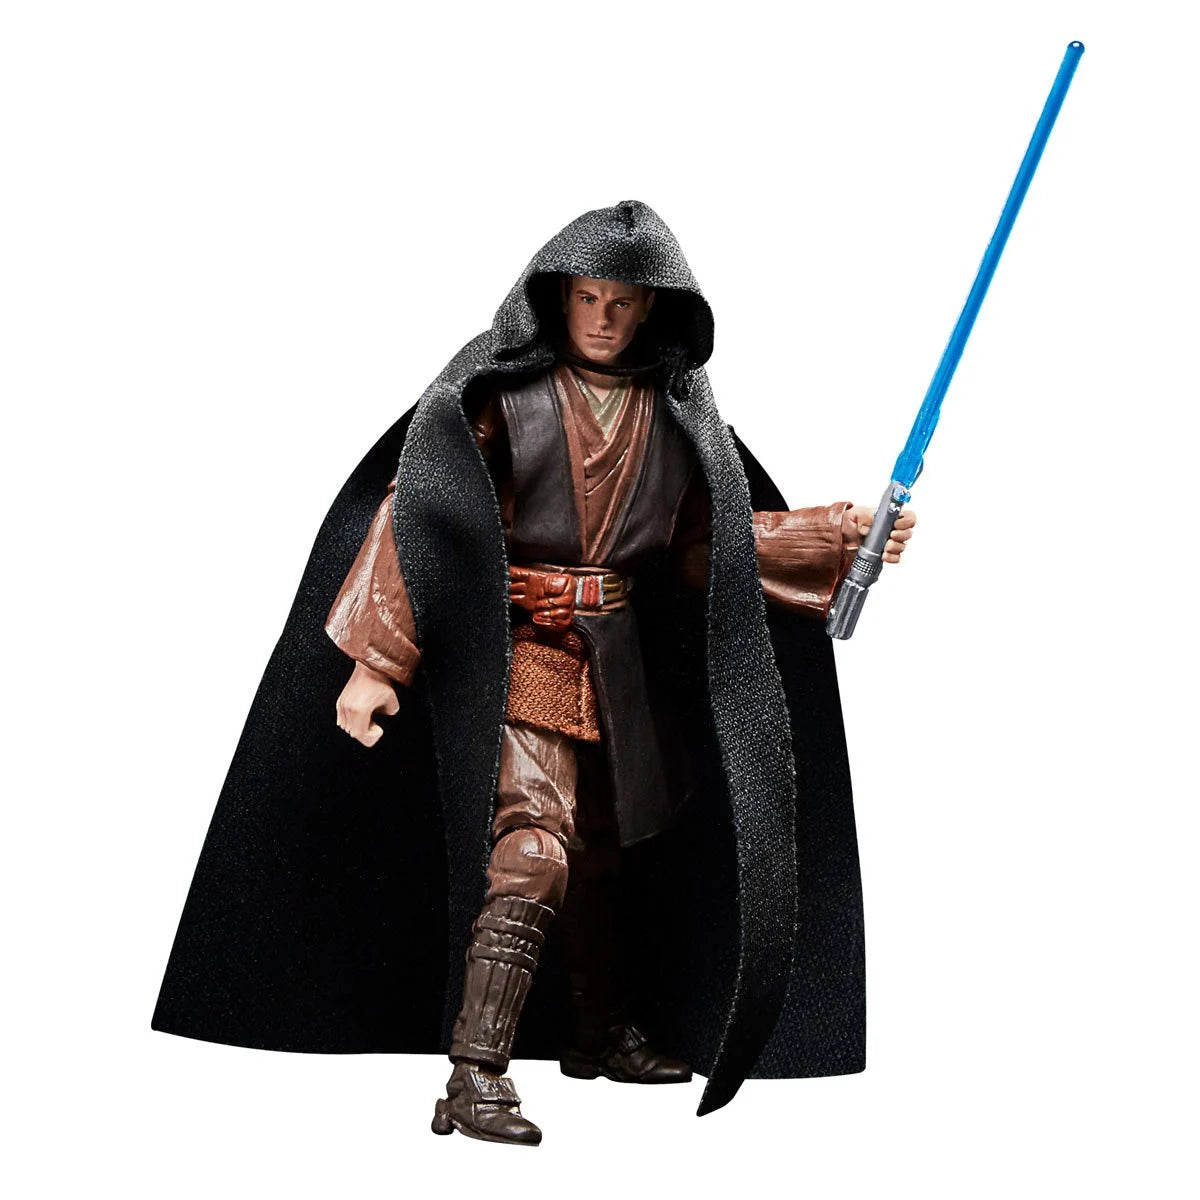 Anakin Skywalker Padawan Star Wars TVC Hasbro